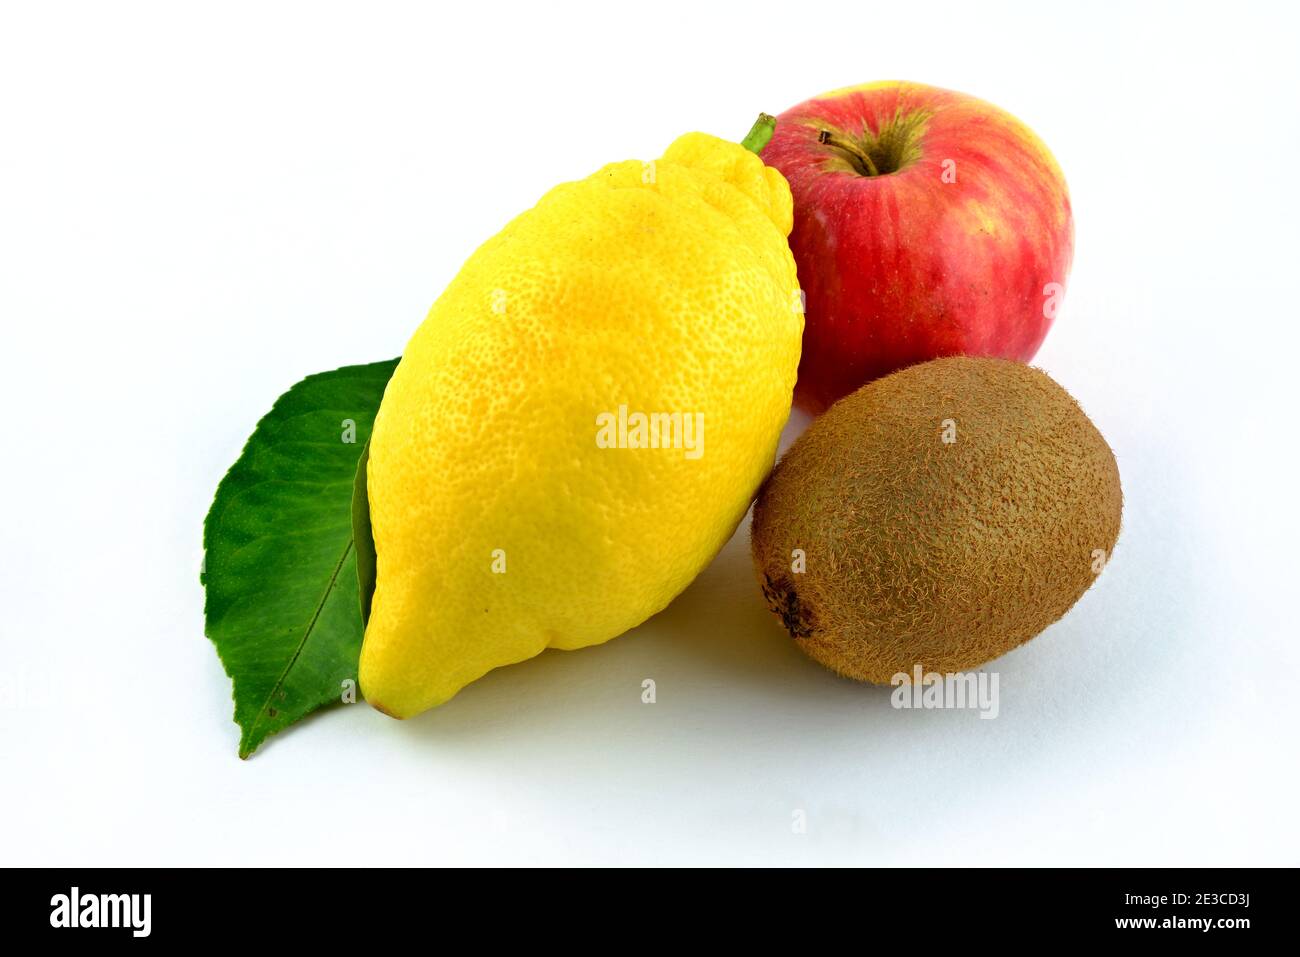 Mixture of fruits, one yellow lemon, one red apple, one brown kiwi. Green lemon leaf. Stock Photo